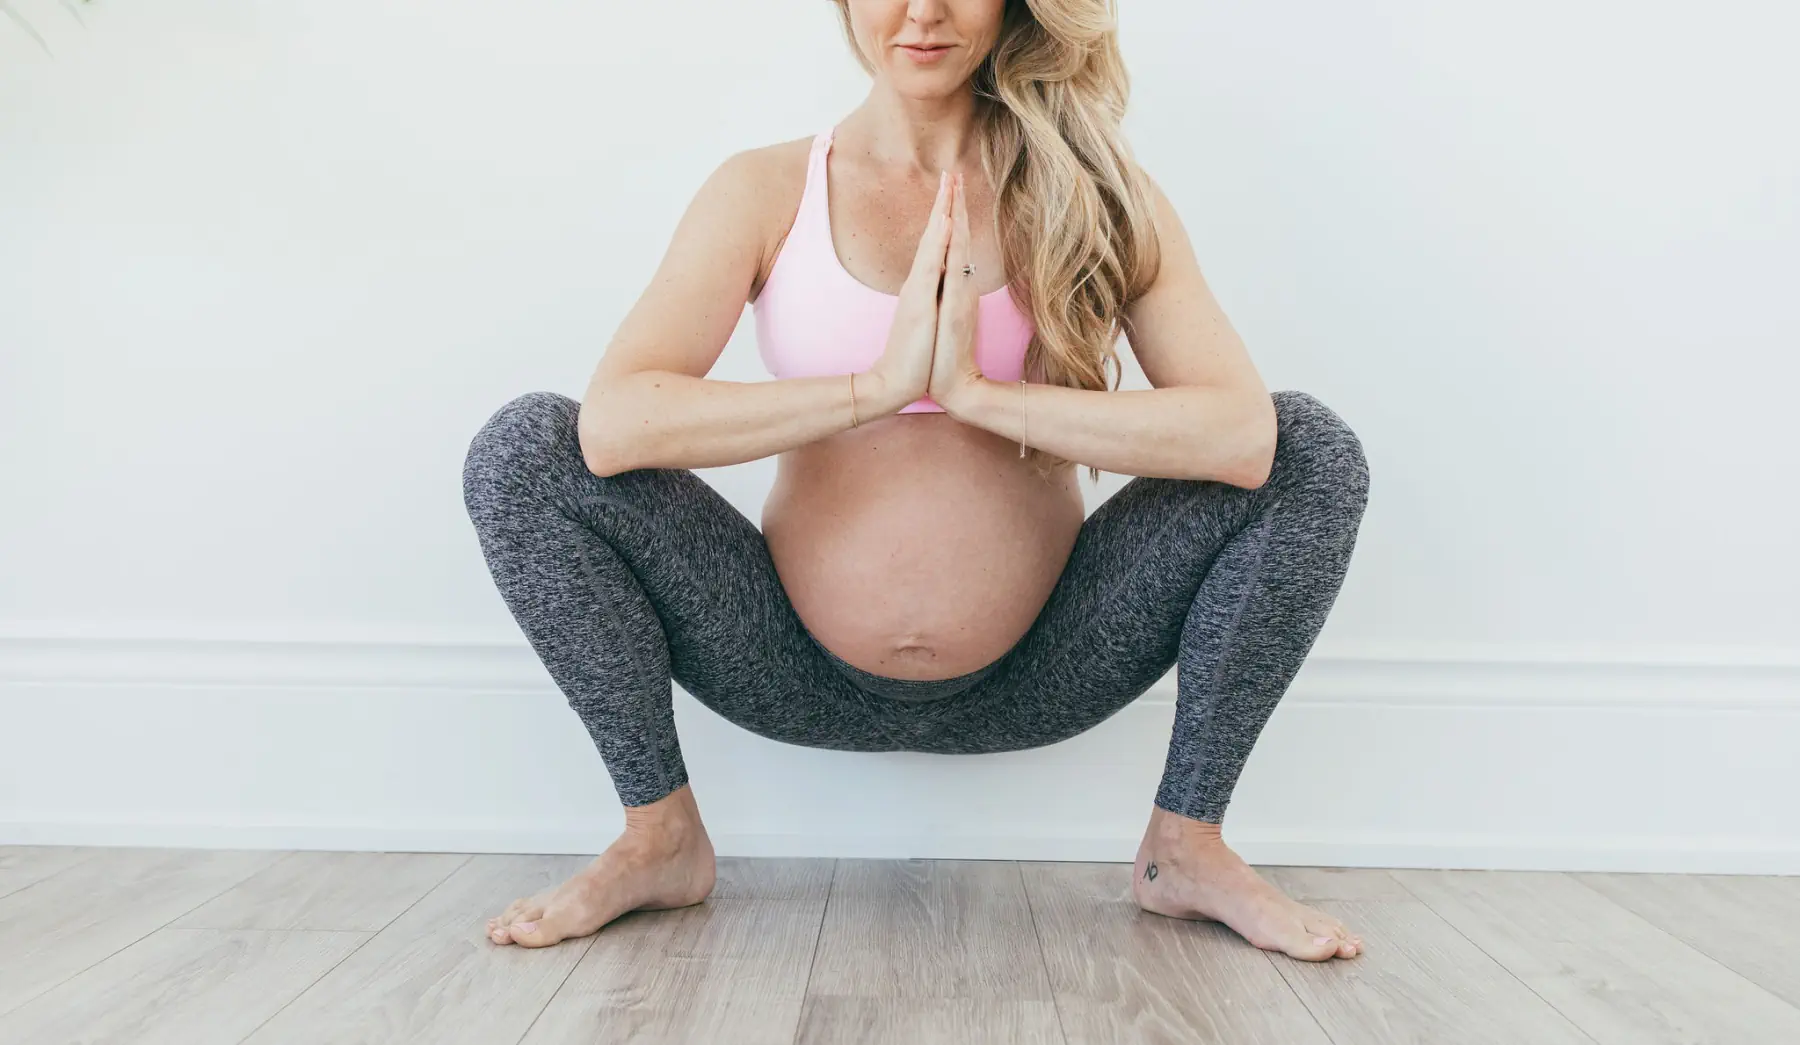 nikki squat while pregnant